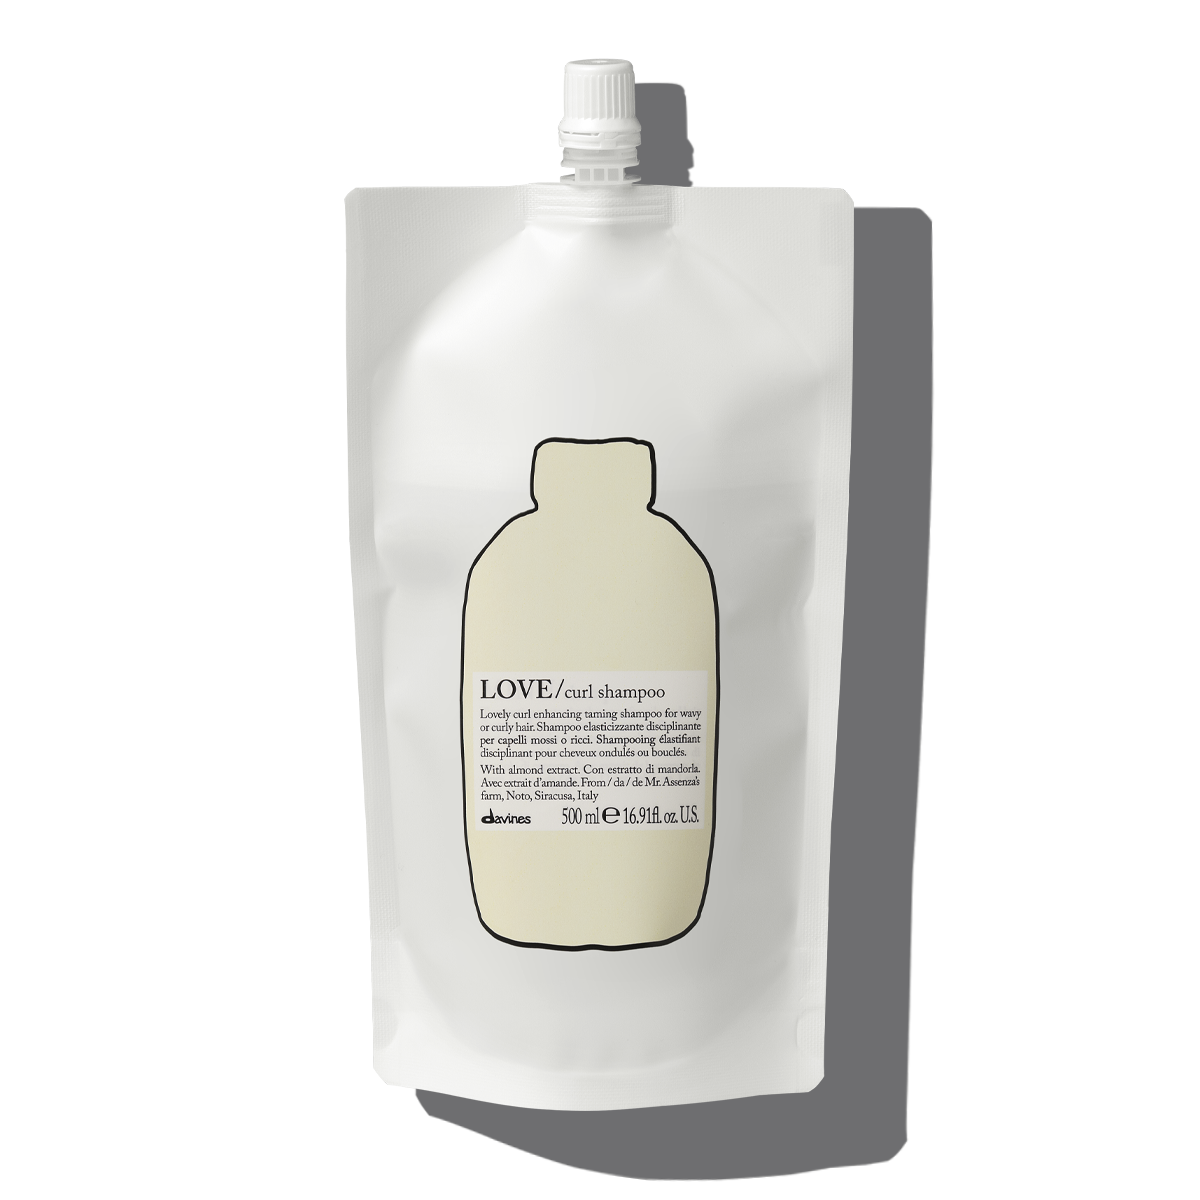 LOVE CURL Shampoo 500 ml refill 1  Davines
